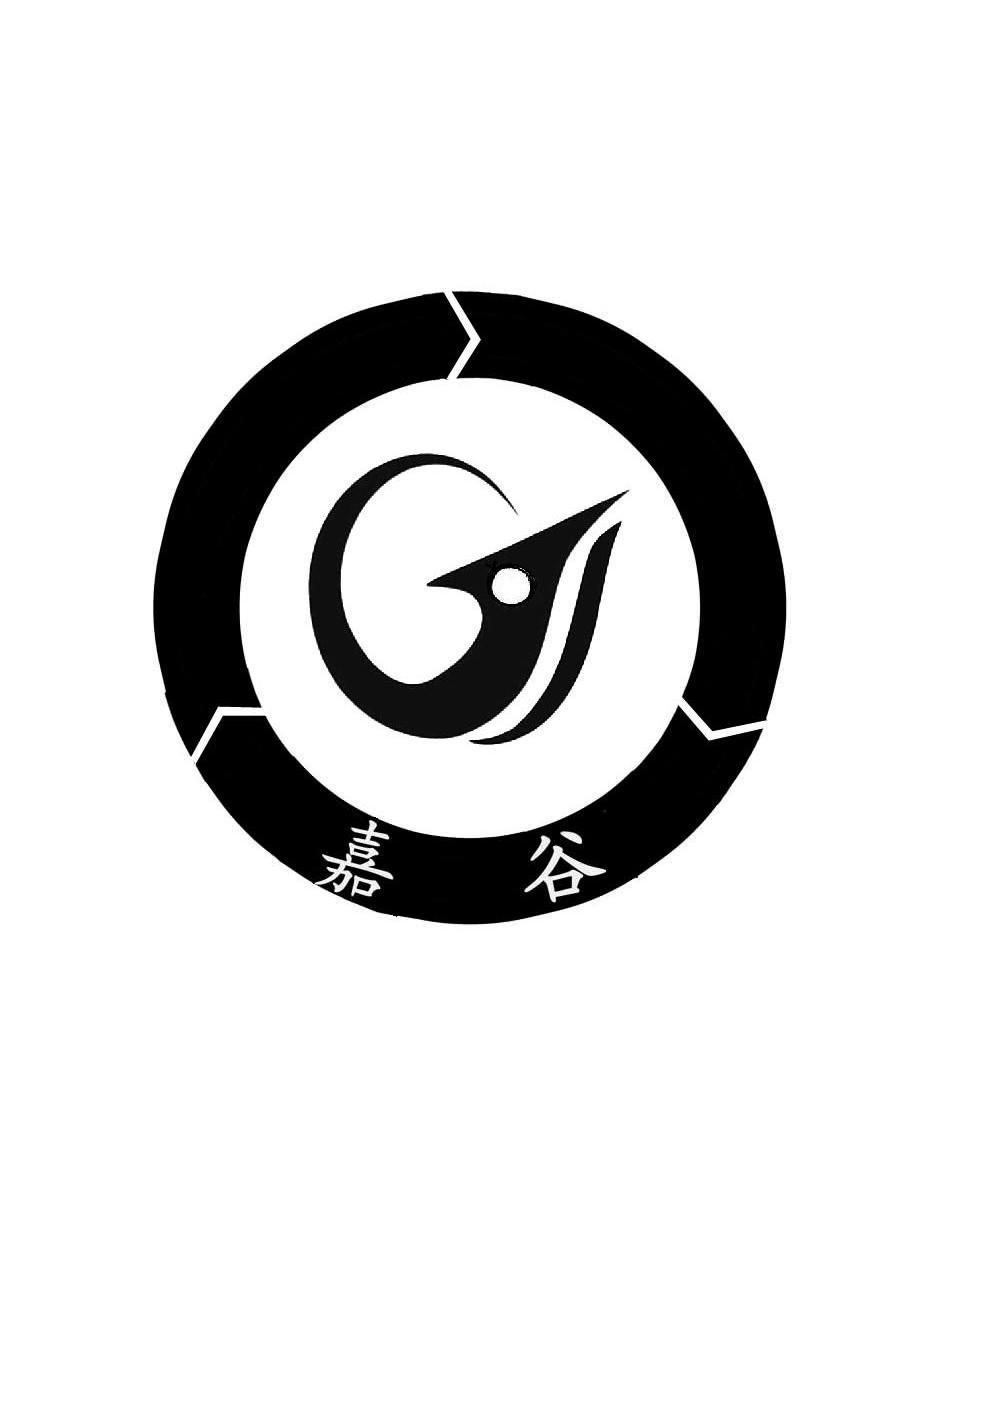 嘉谷logo